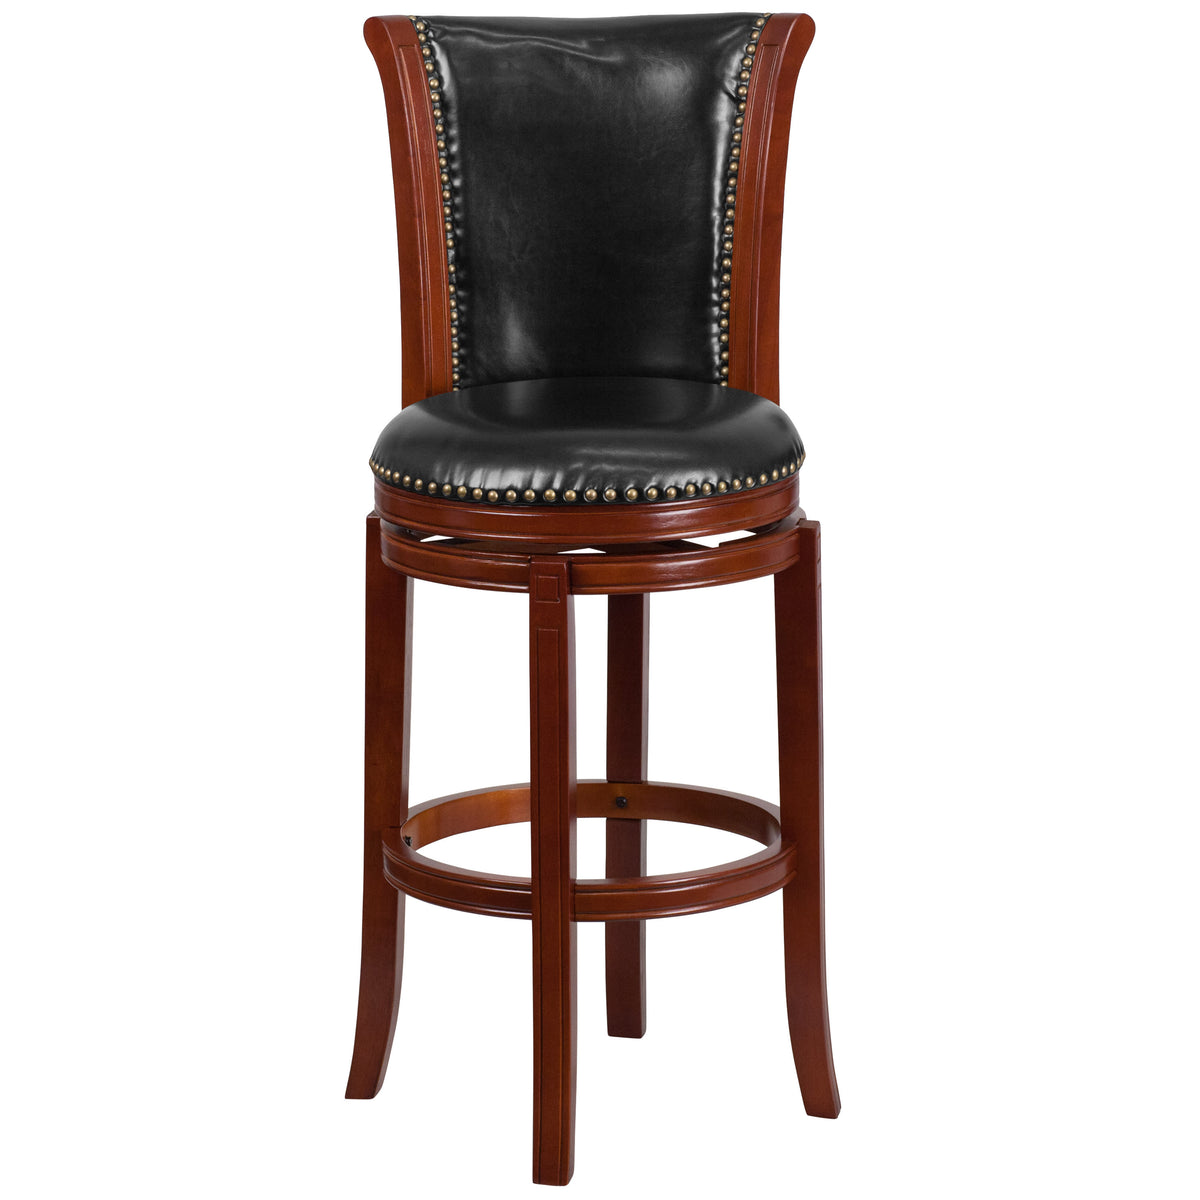 30inch High Dk Chestnut Wood Barstool w/Panel Back & Black LeatherSoft Swivel Seat